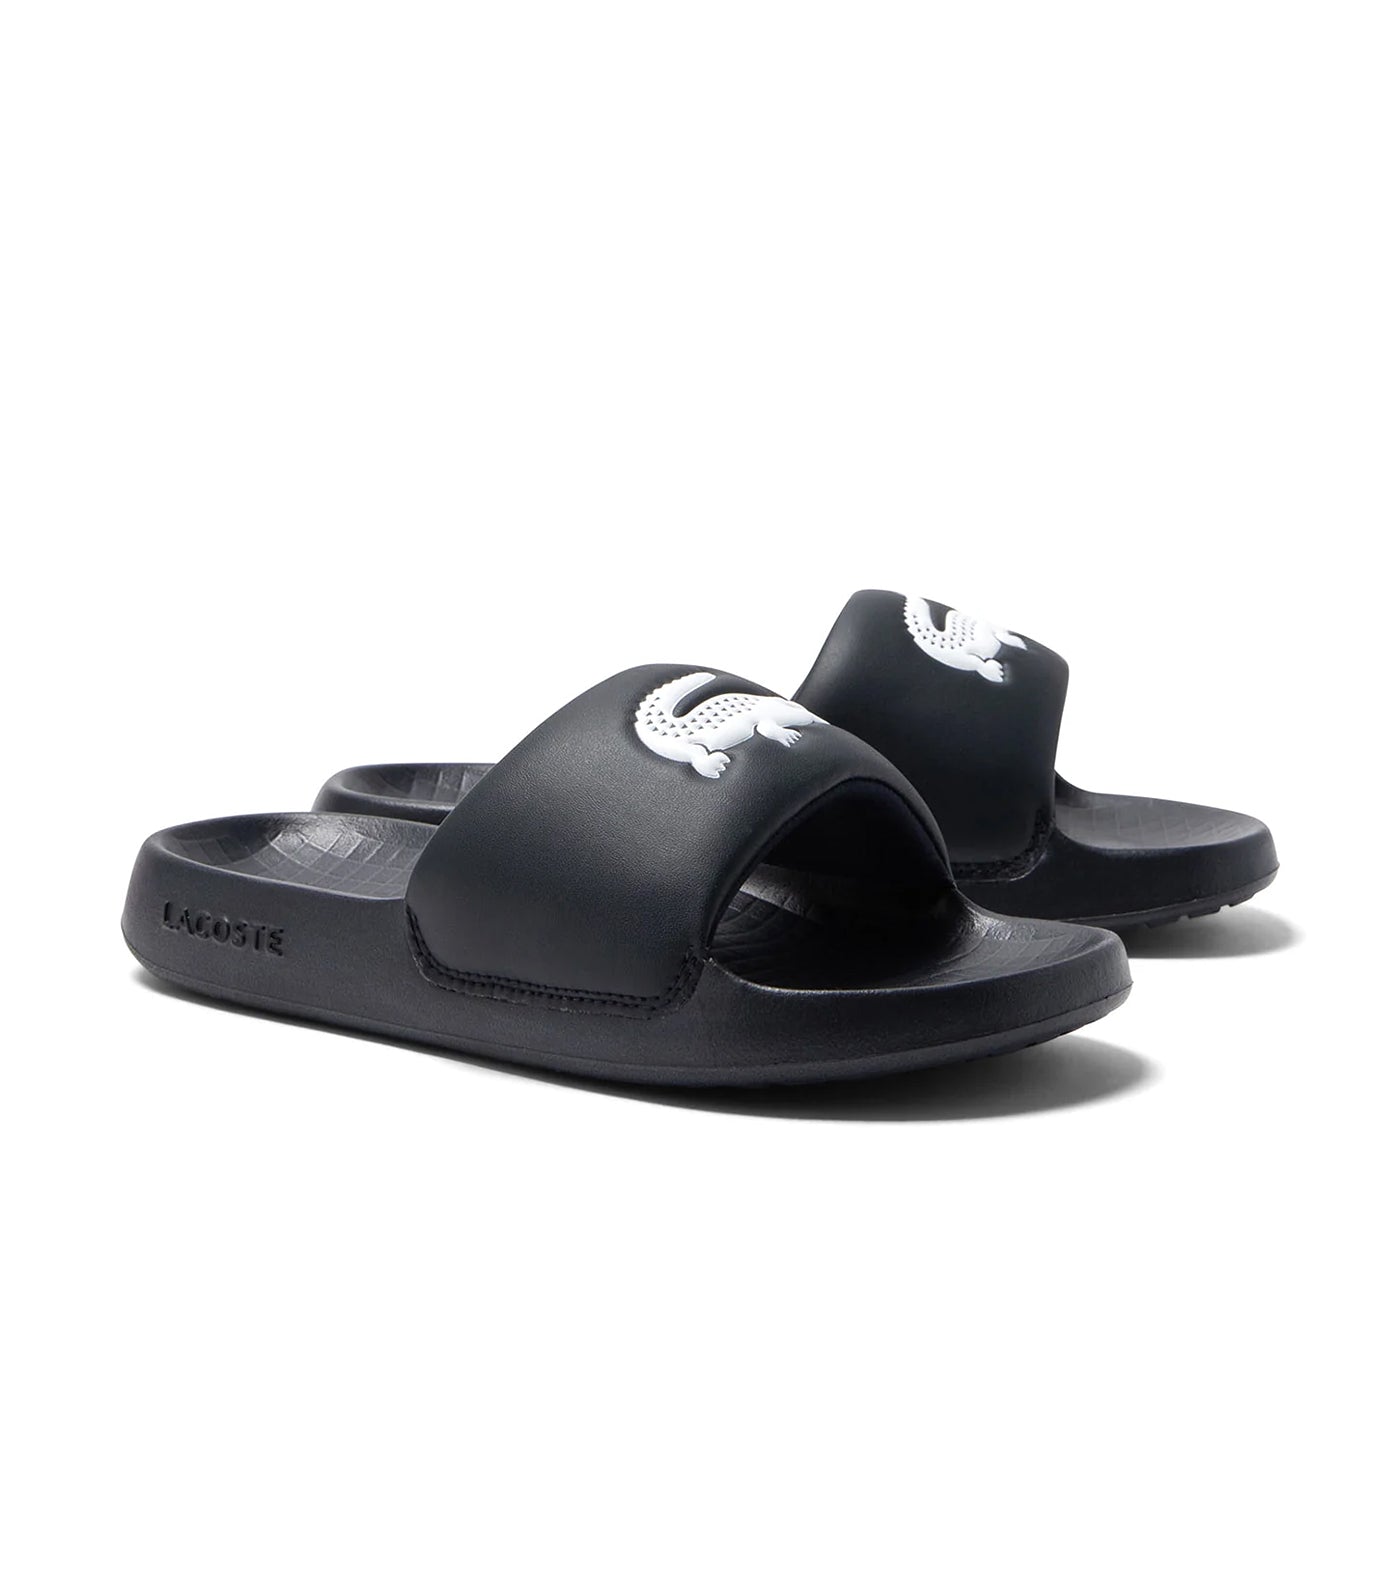 Men's Croco 1.0 Synthetic Slides Black/White